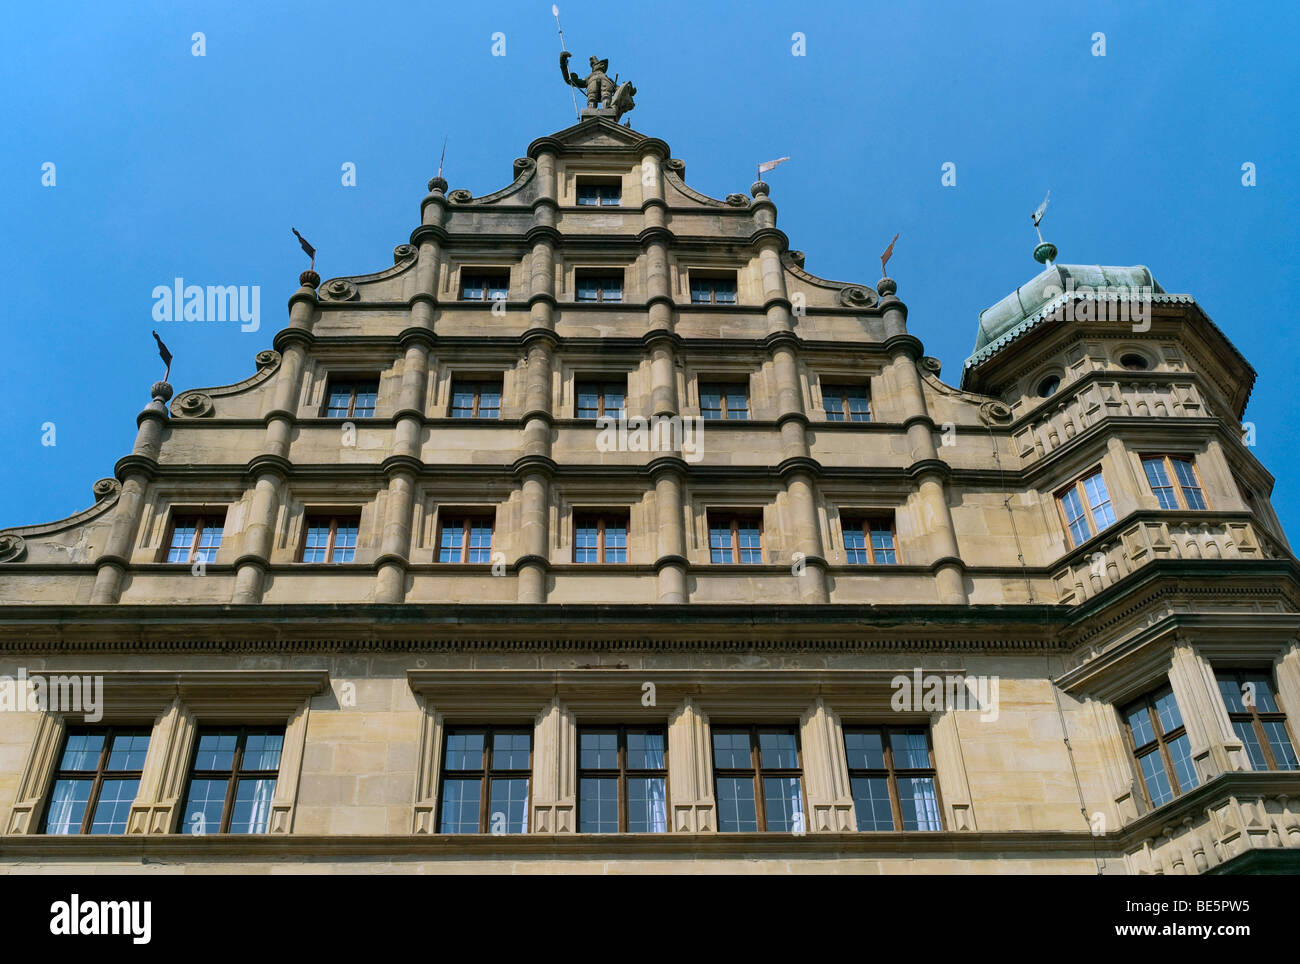 Renaissance town hall facade with baroque arcade porch, Rothenburg ob der Tauber, Bavaria, Germany, Europe Stock Photo